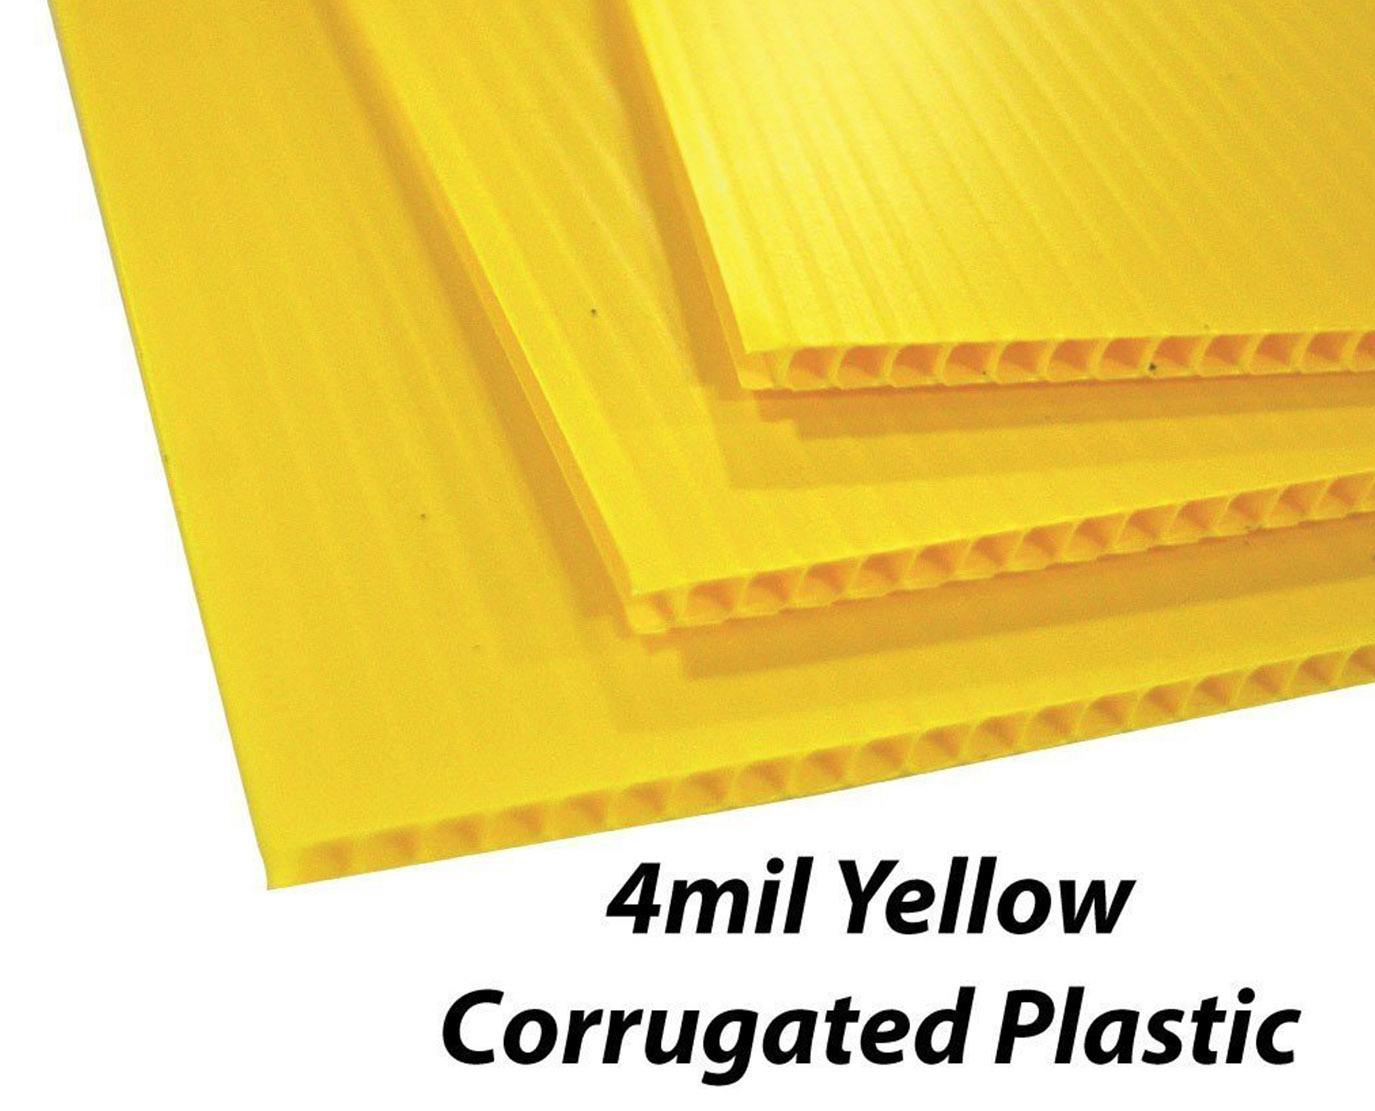 4mil yellow corrugated plastic